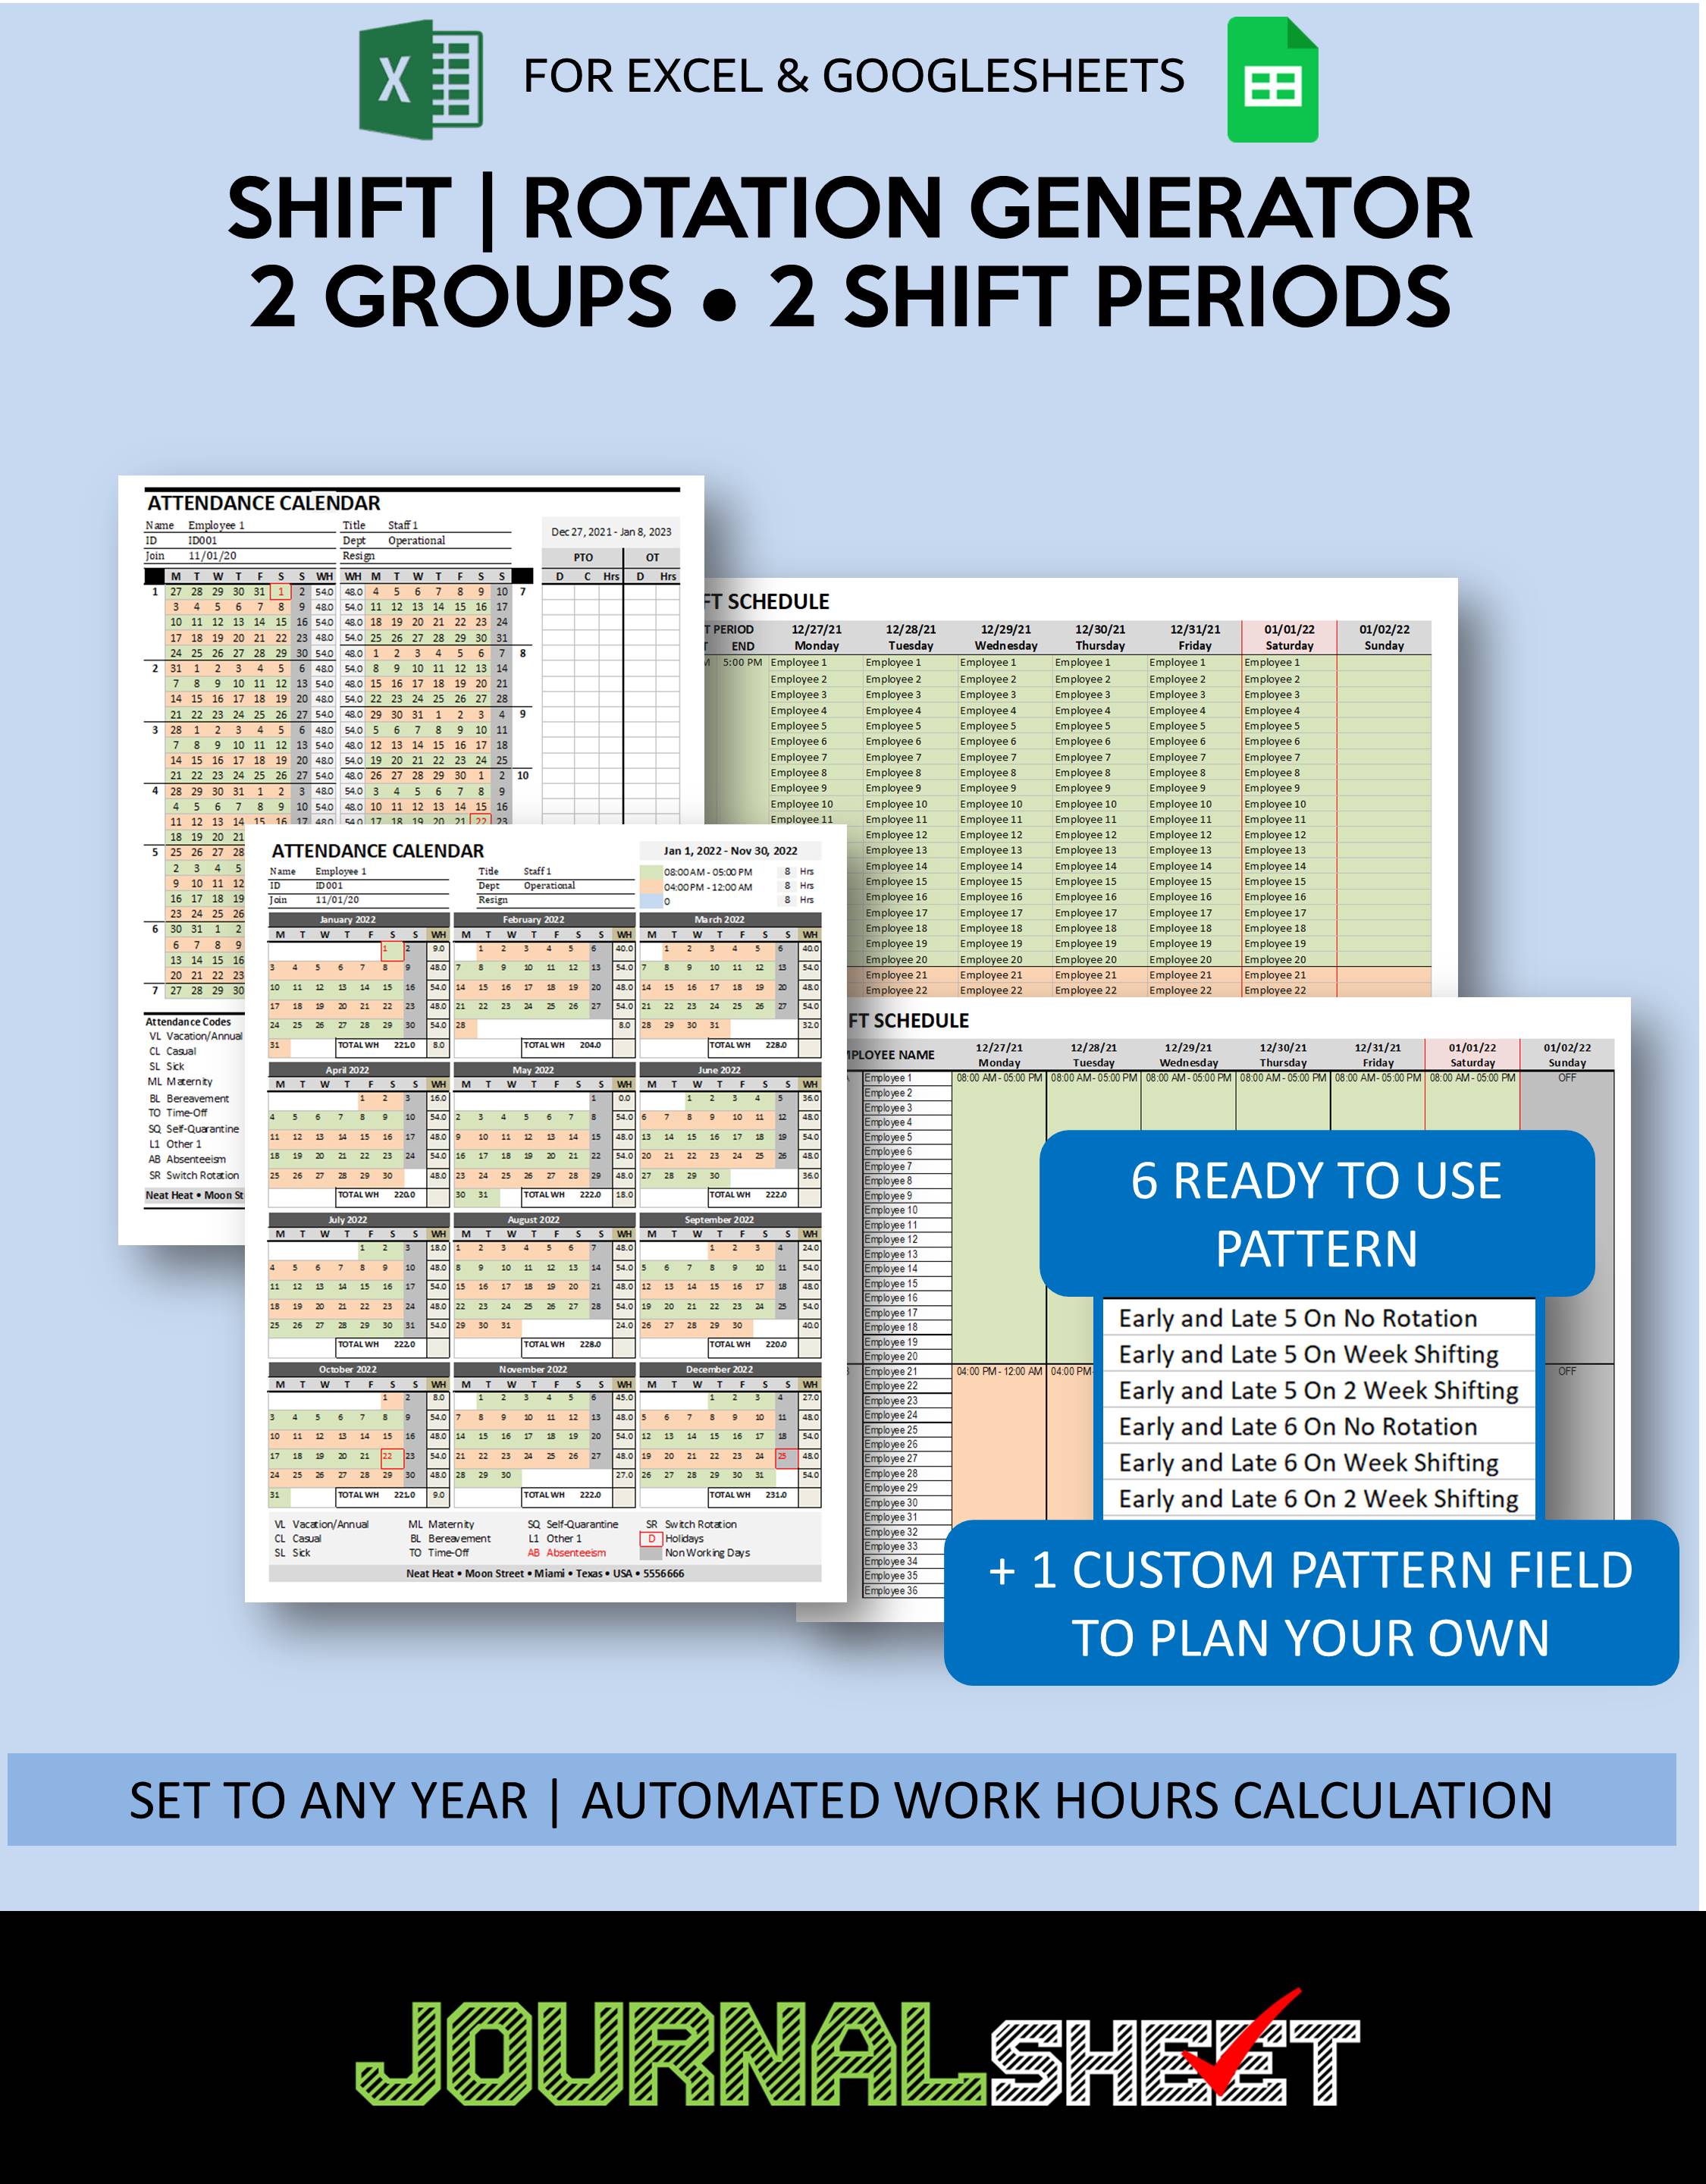 Shift Schedule Generator - 2 Groups 2 Shifts